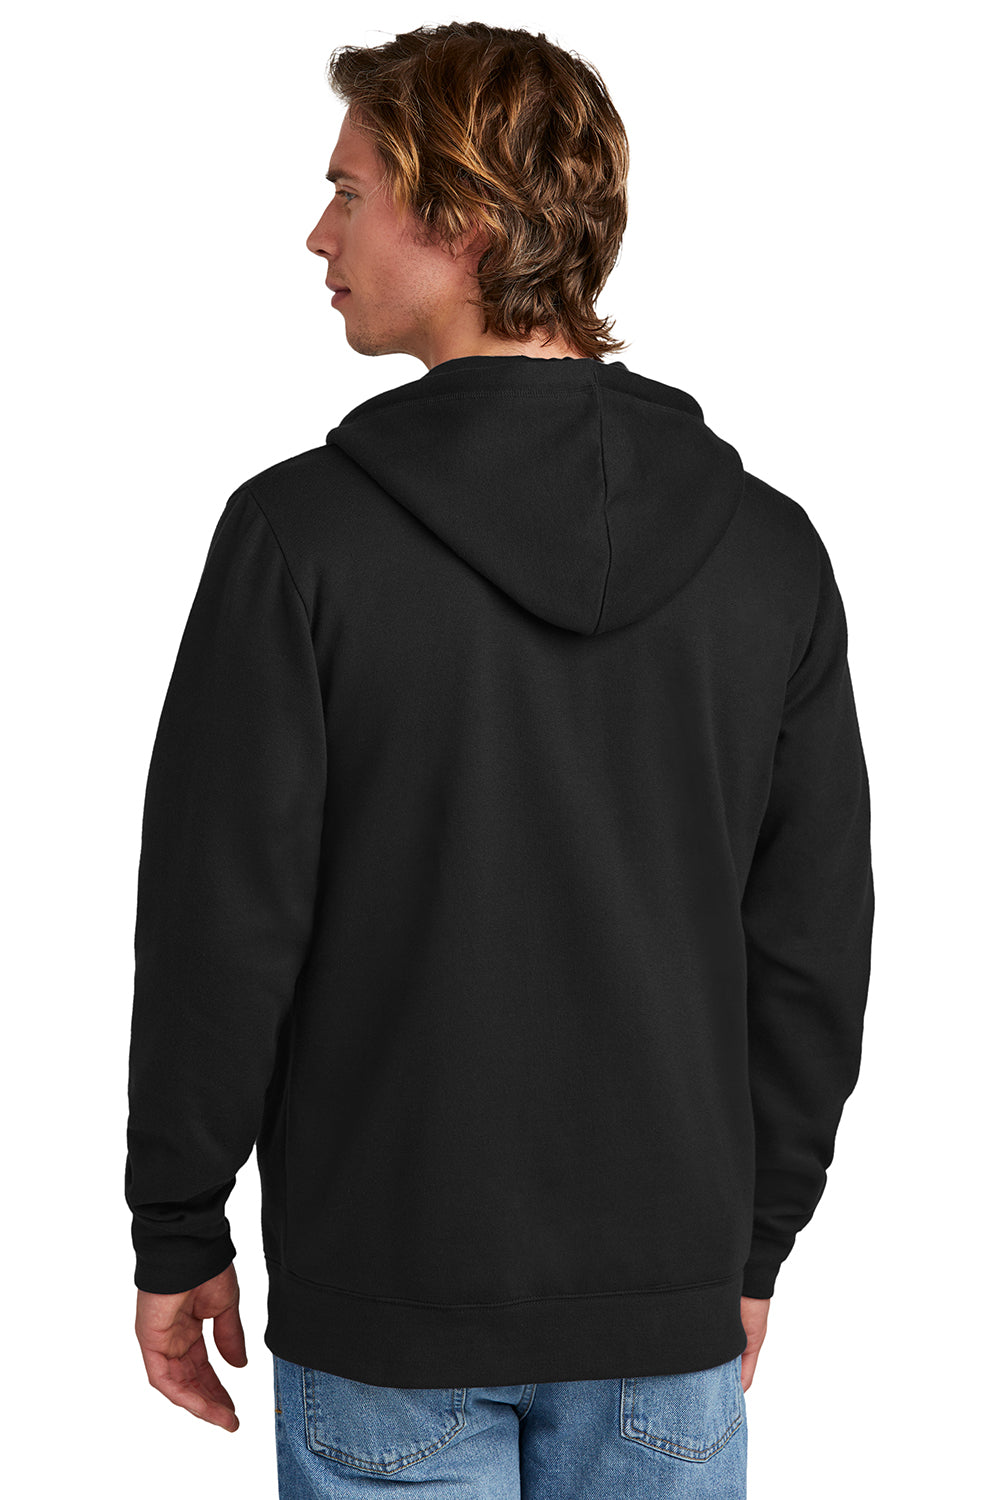 New Era NEA551 Mens Comeback Fleece Full Zip Hooded Sweatshirt Hoodie Black Back